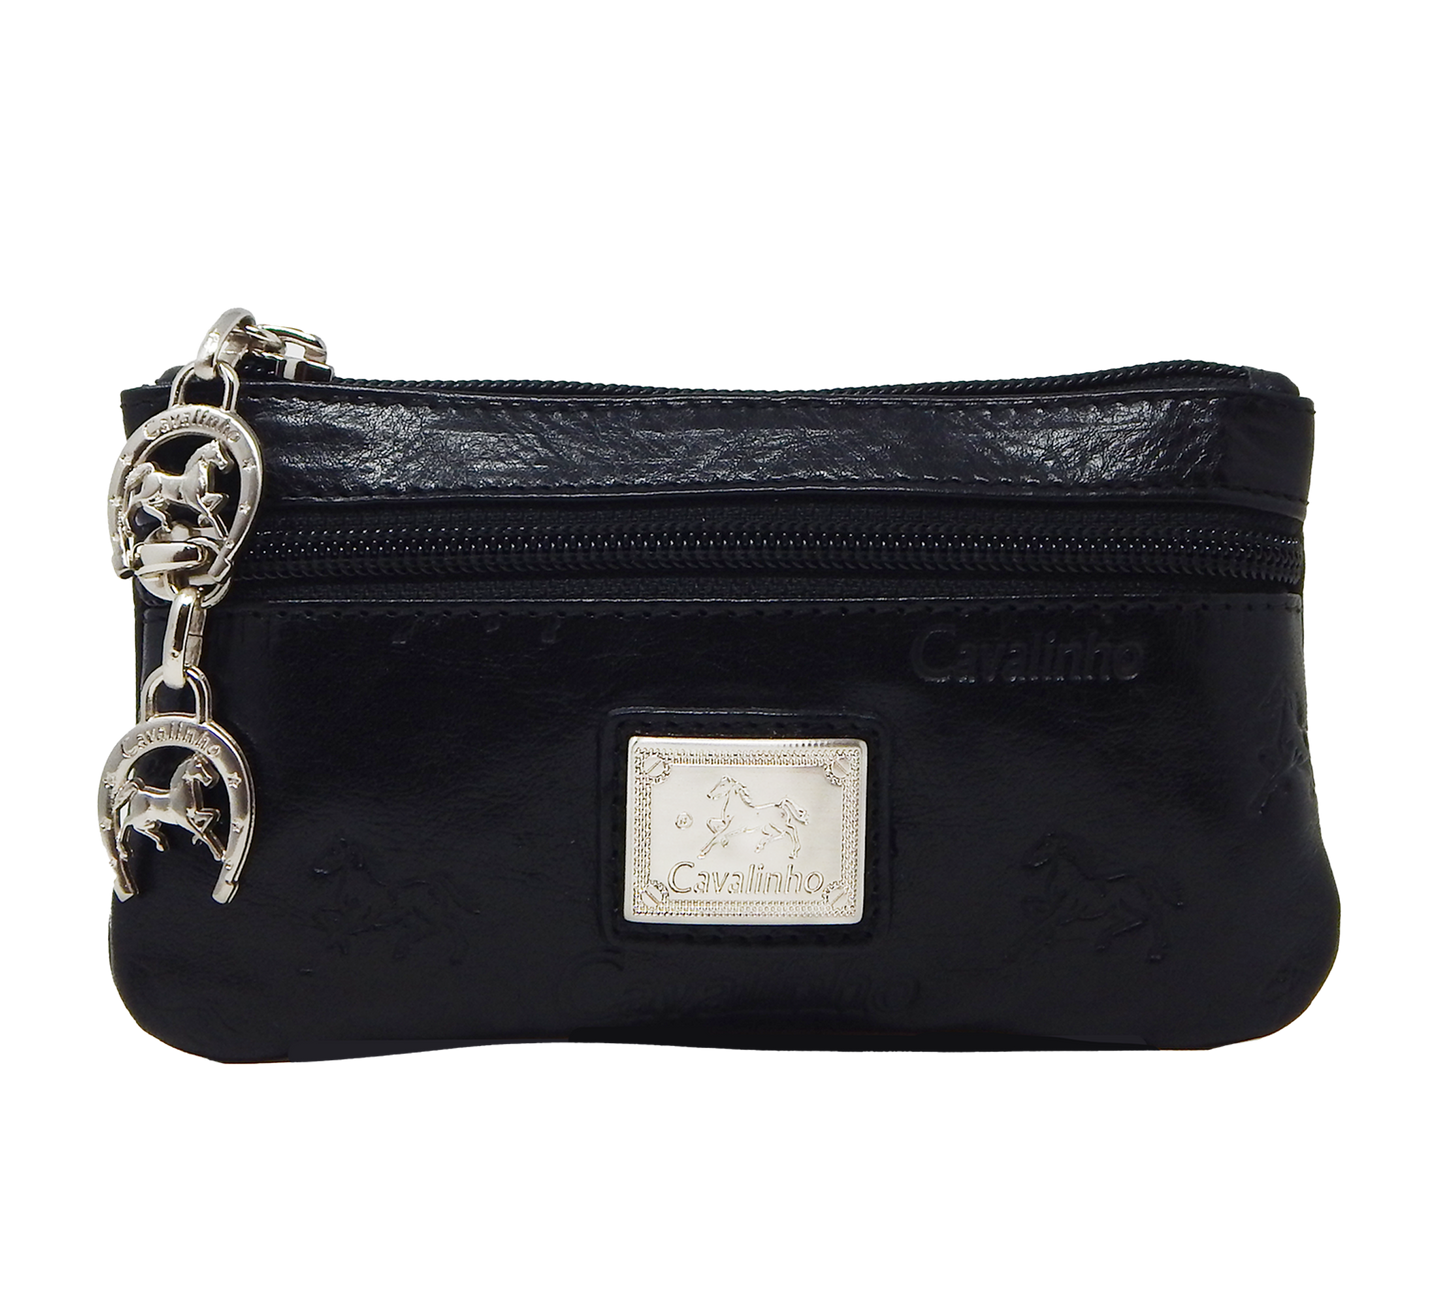 Cavalinho Cavalo Lusitano Leather Cosmetic Case - Black - 28090254.01_02